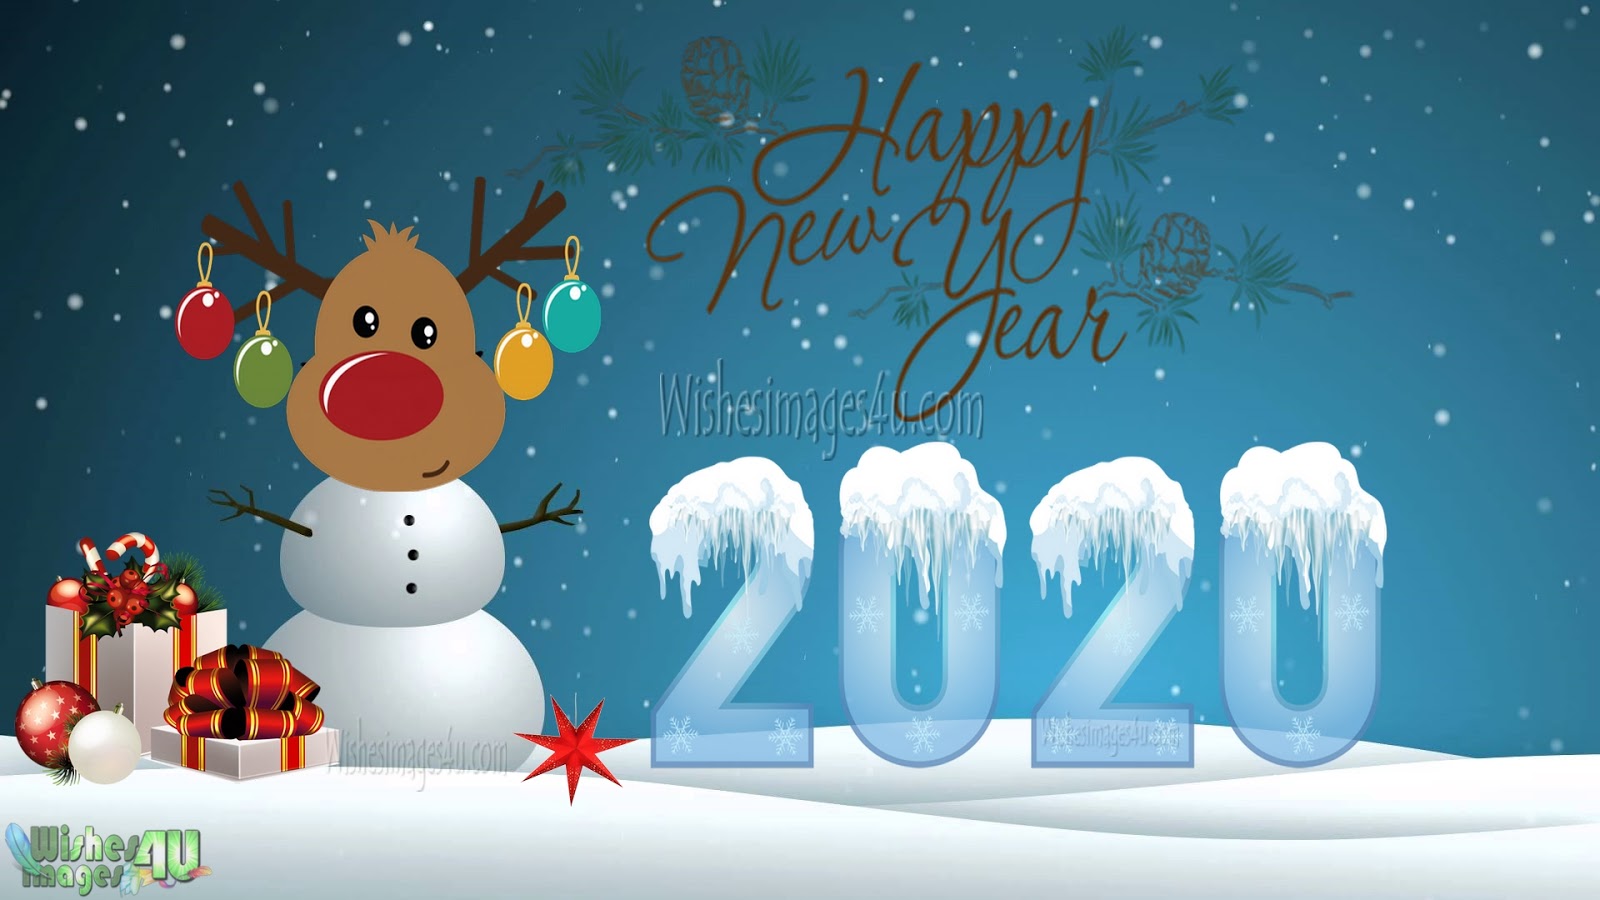 Happy New Year 2020 1080p Full Hd Wallpaper Download - Happy New Year 2020 1080p - HD Wallpaper 